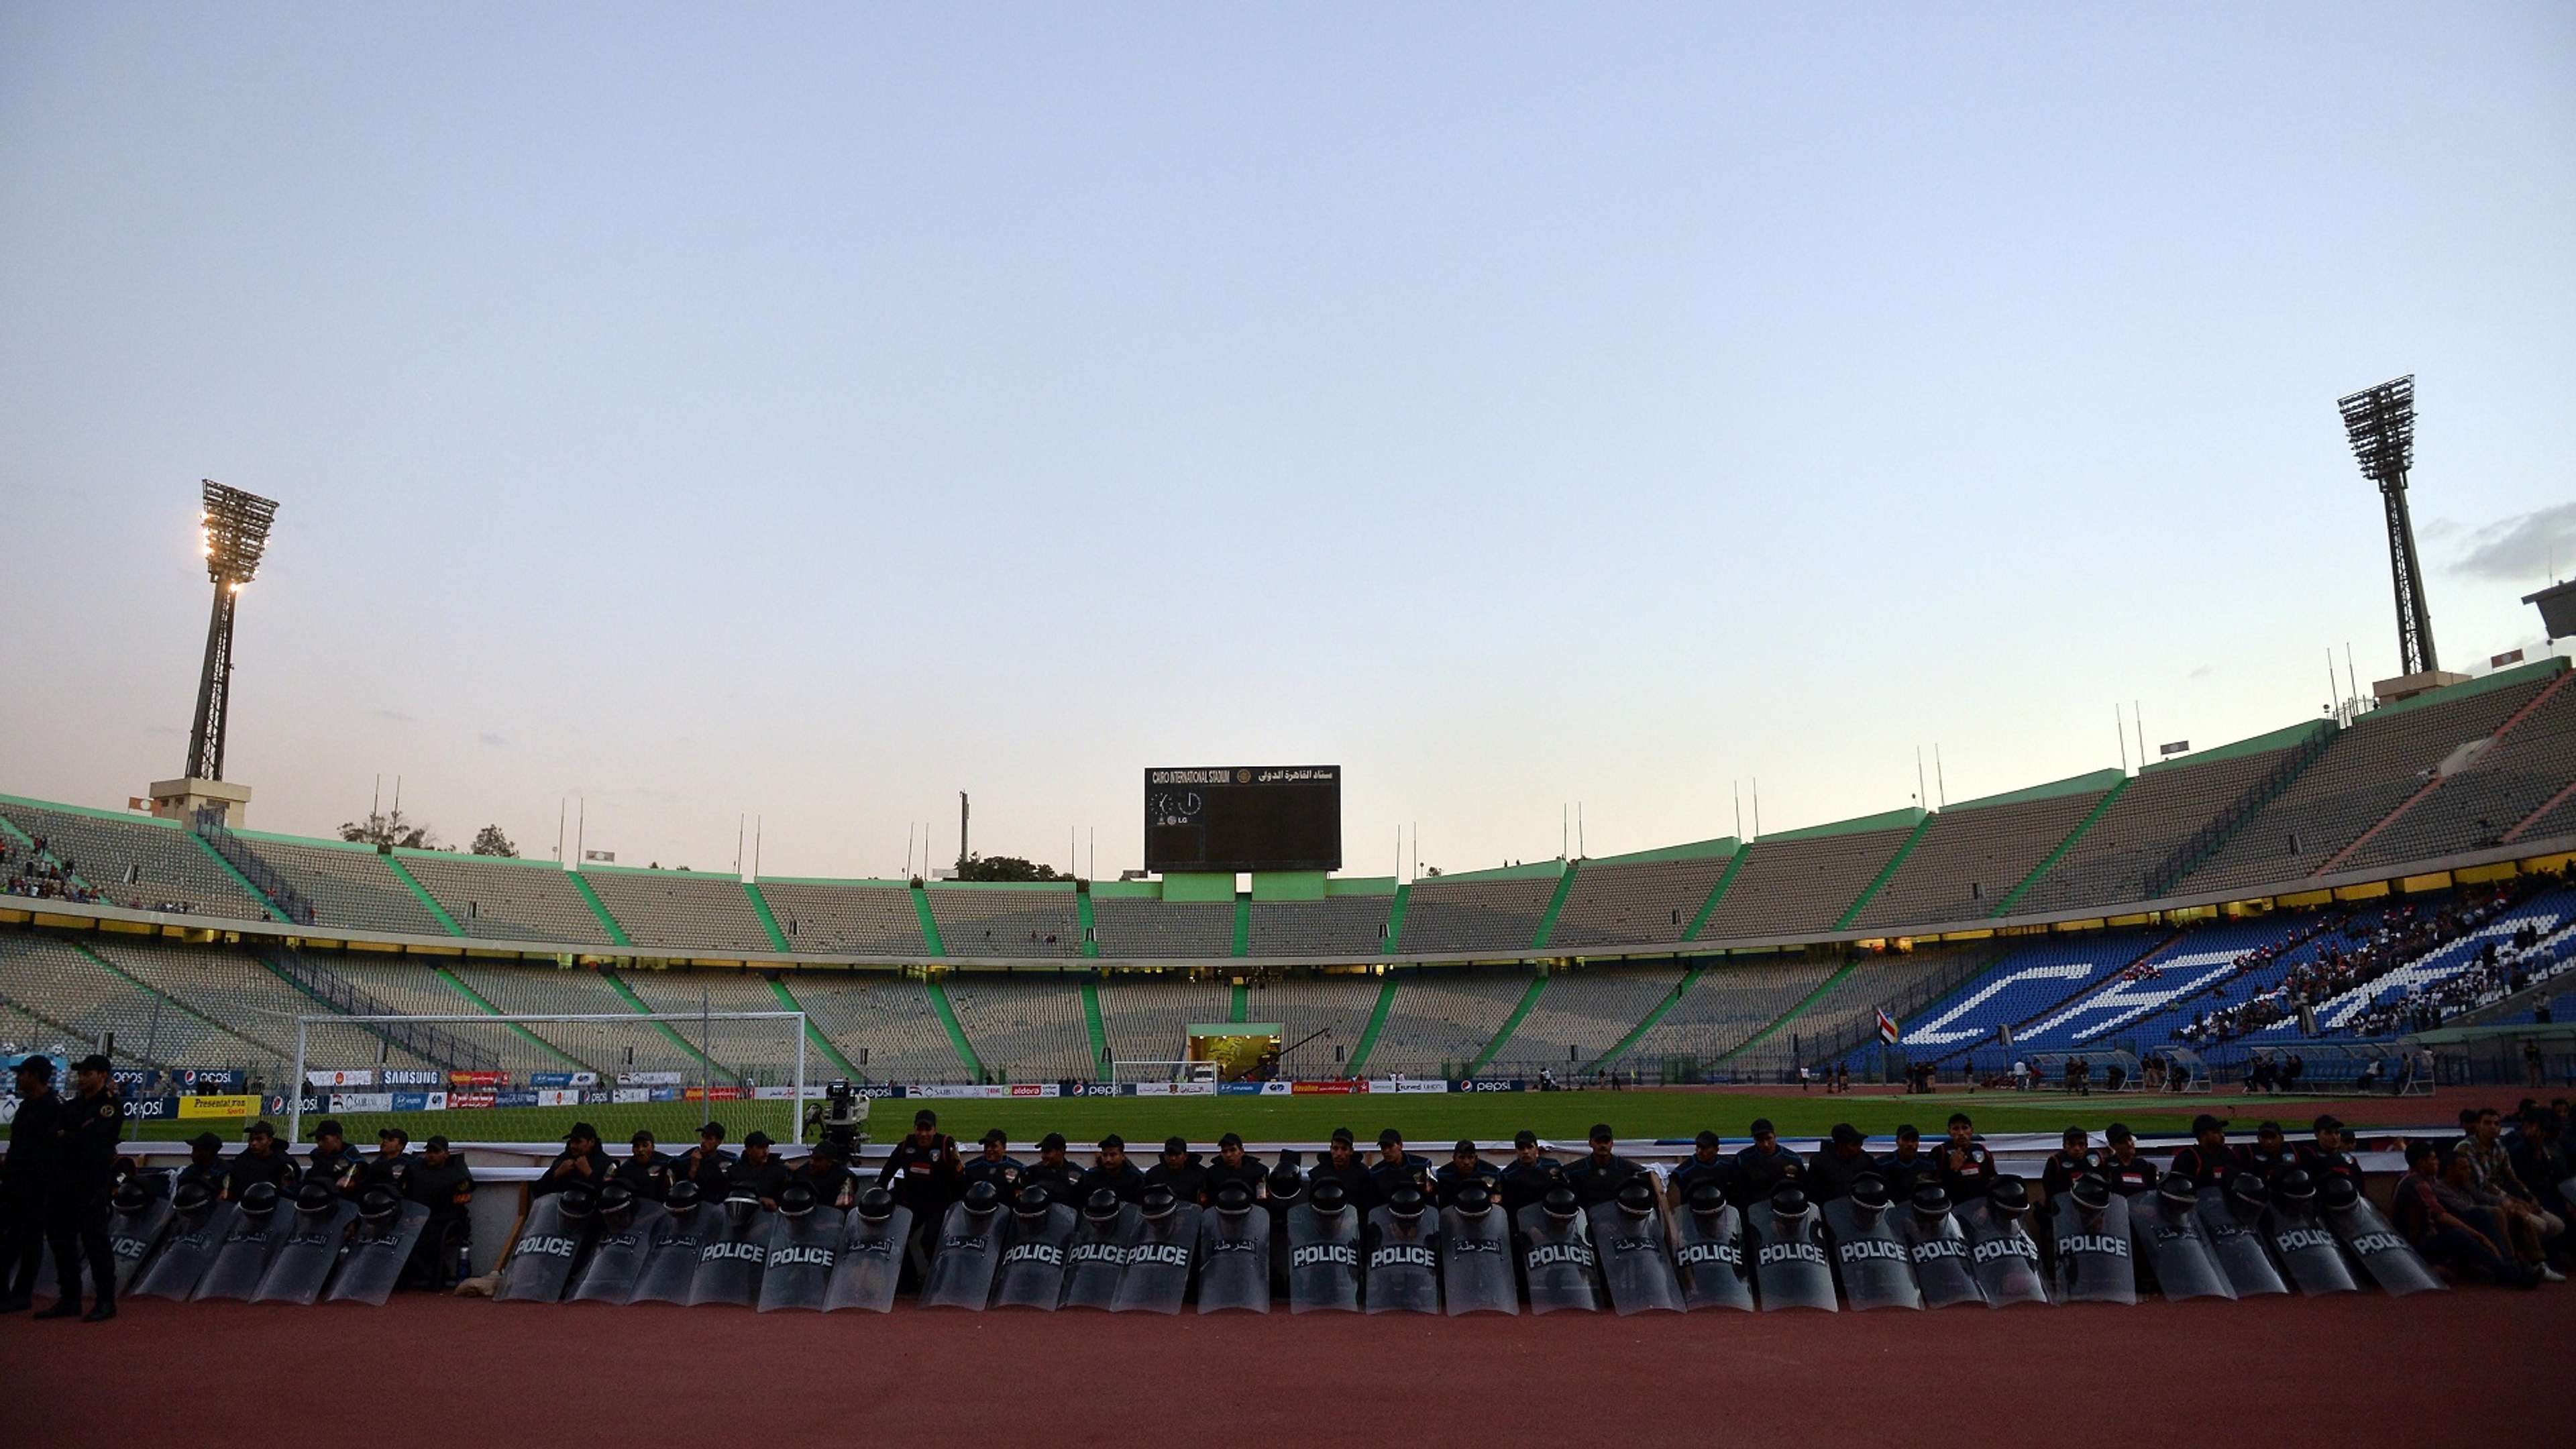 Cairo International Stadium in the Egypt